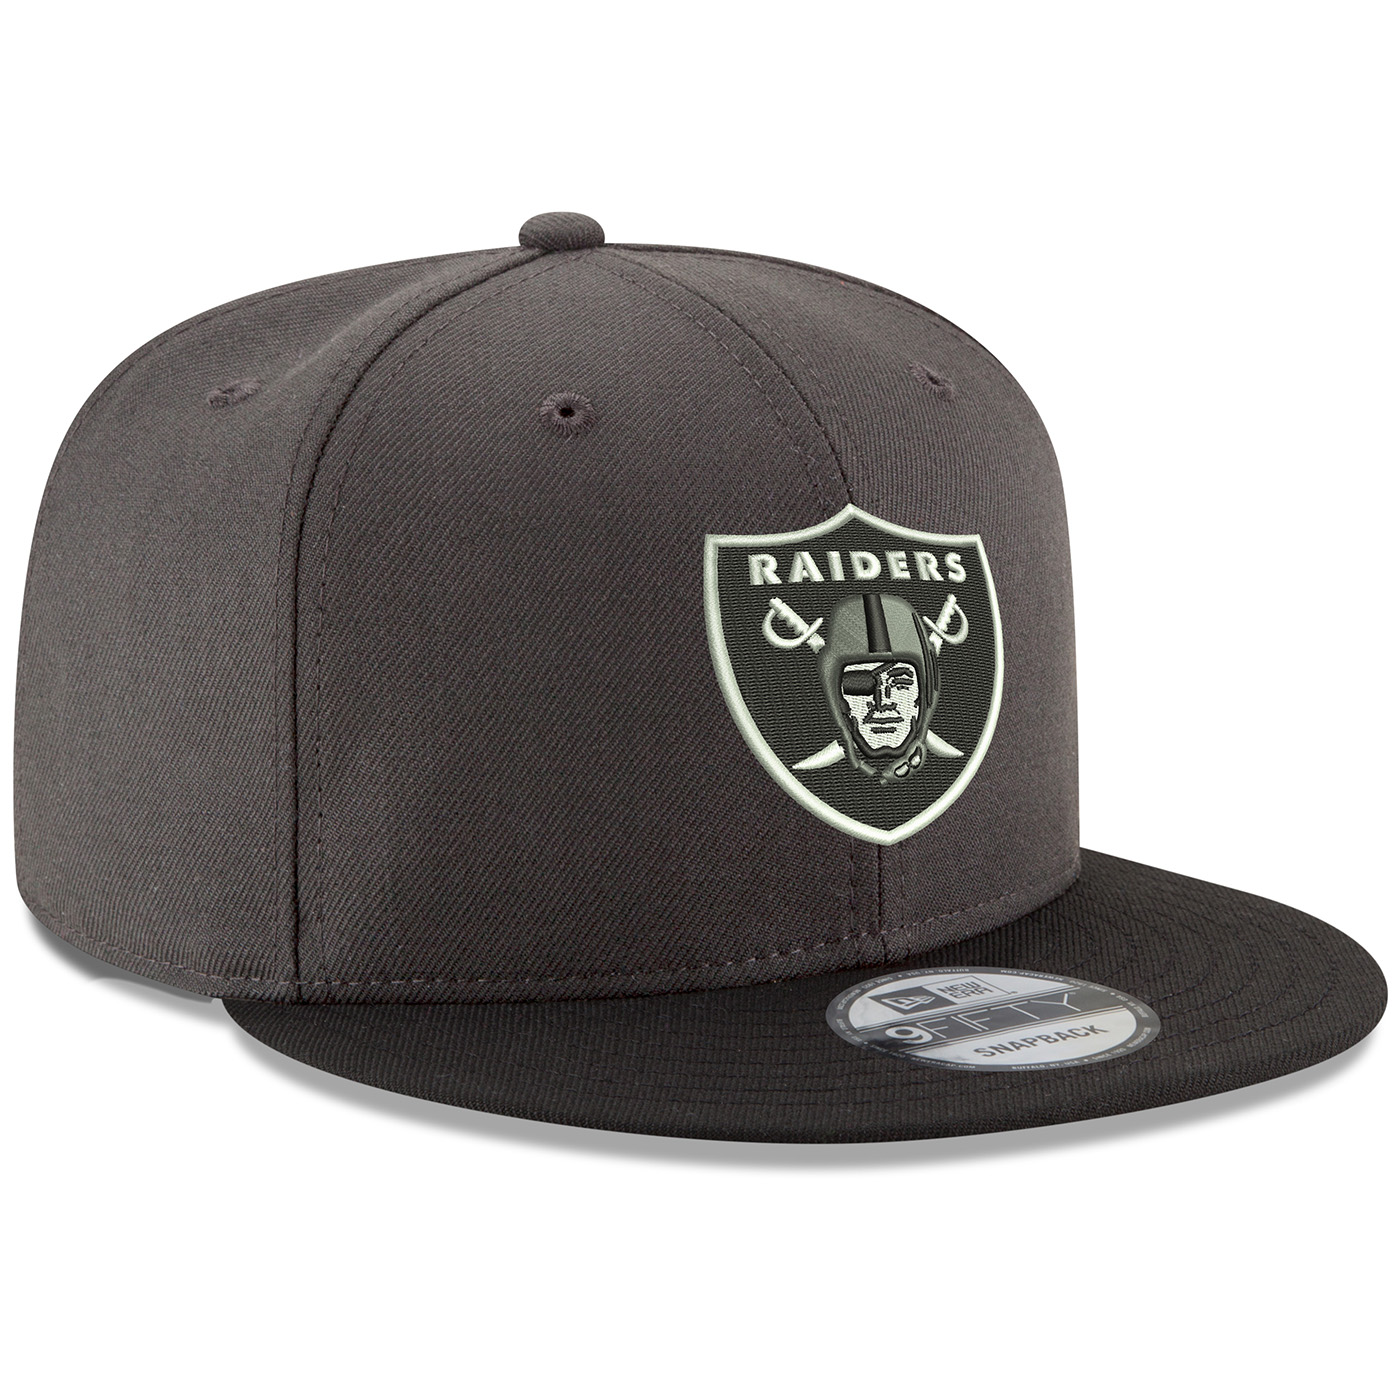 New Era Oakland Raiders 9FIFTY NFL Cotton Block Grey/Black Cap